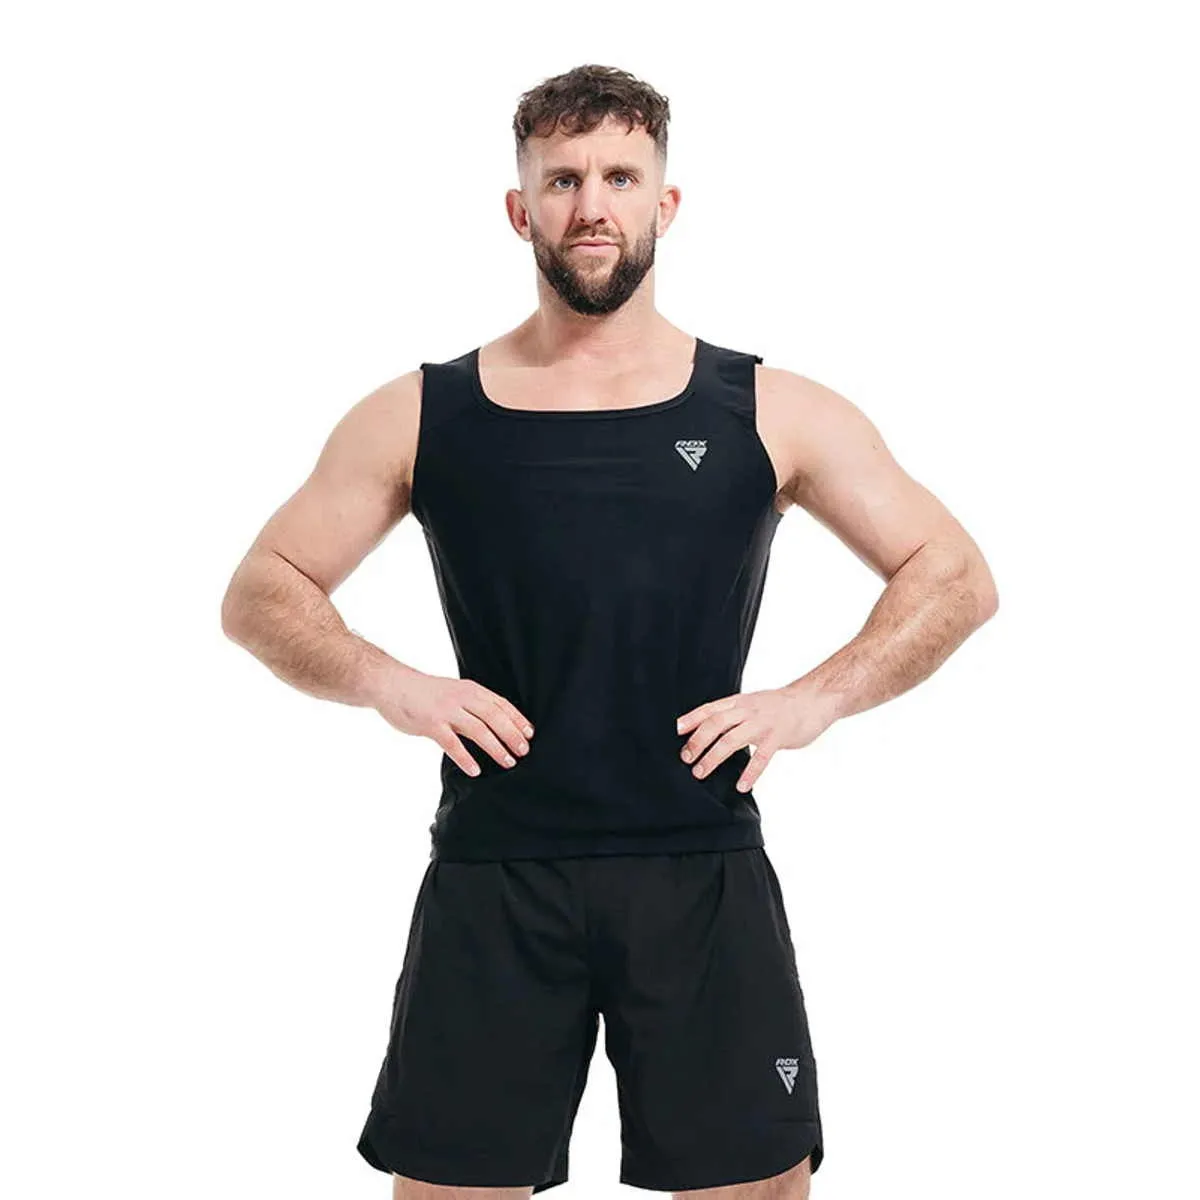 Sweat shirt sleeveless black RDX sauna shirt sweat waistcoat